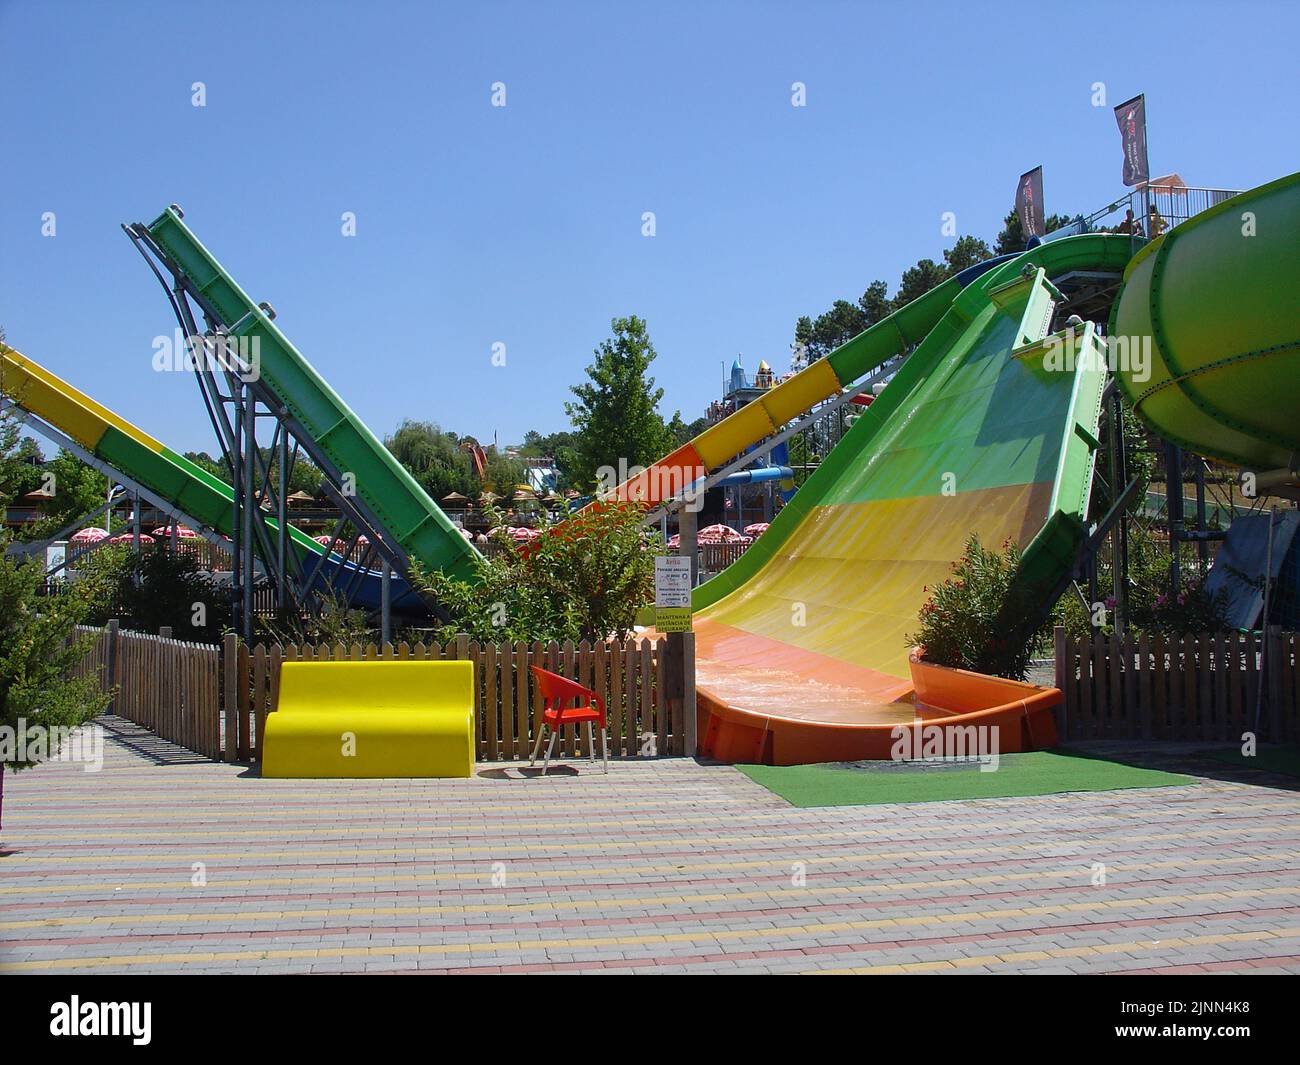 Naturewaterpark Vila Real, Waterpark, water park, amusement summer park with sliding and splashing tracks. Stock Photo